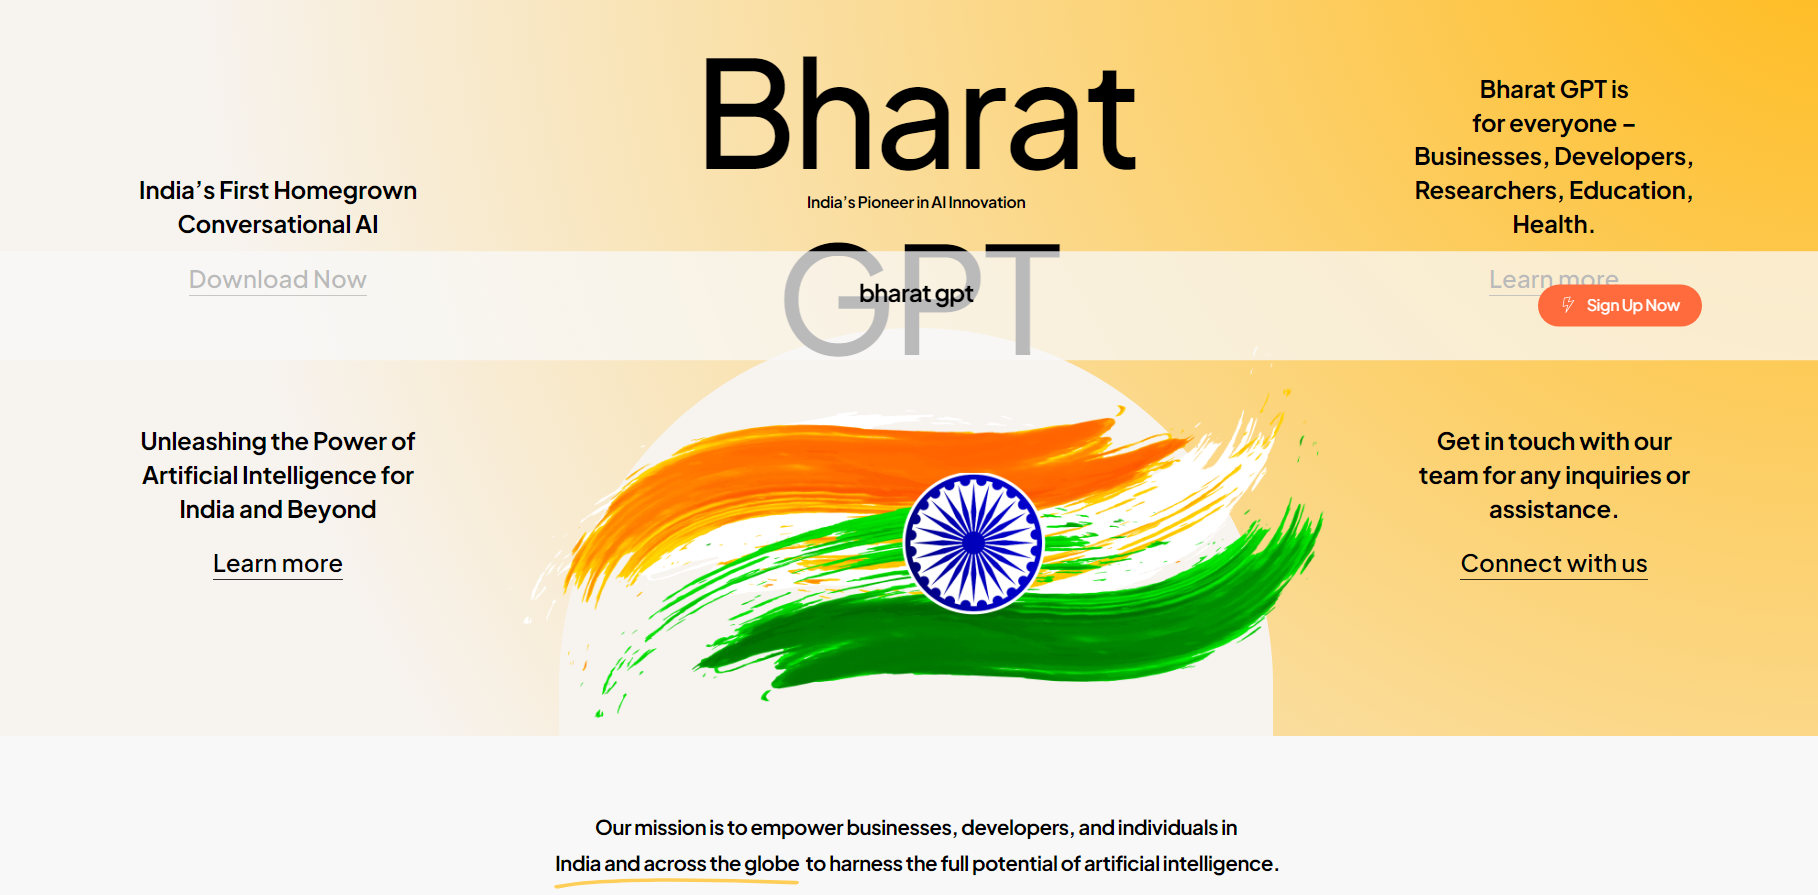 Bharath GPT